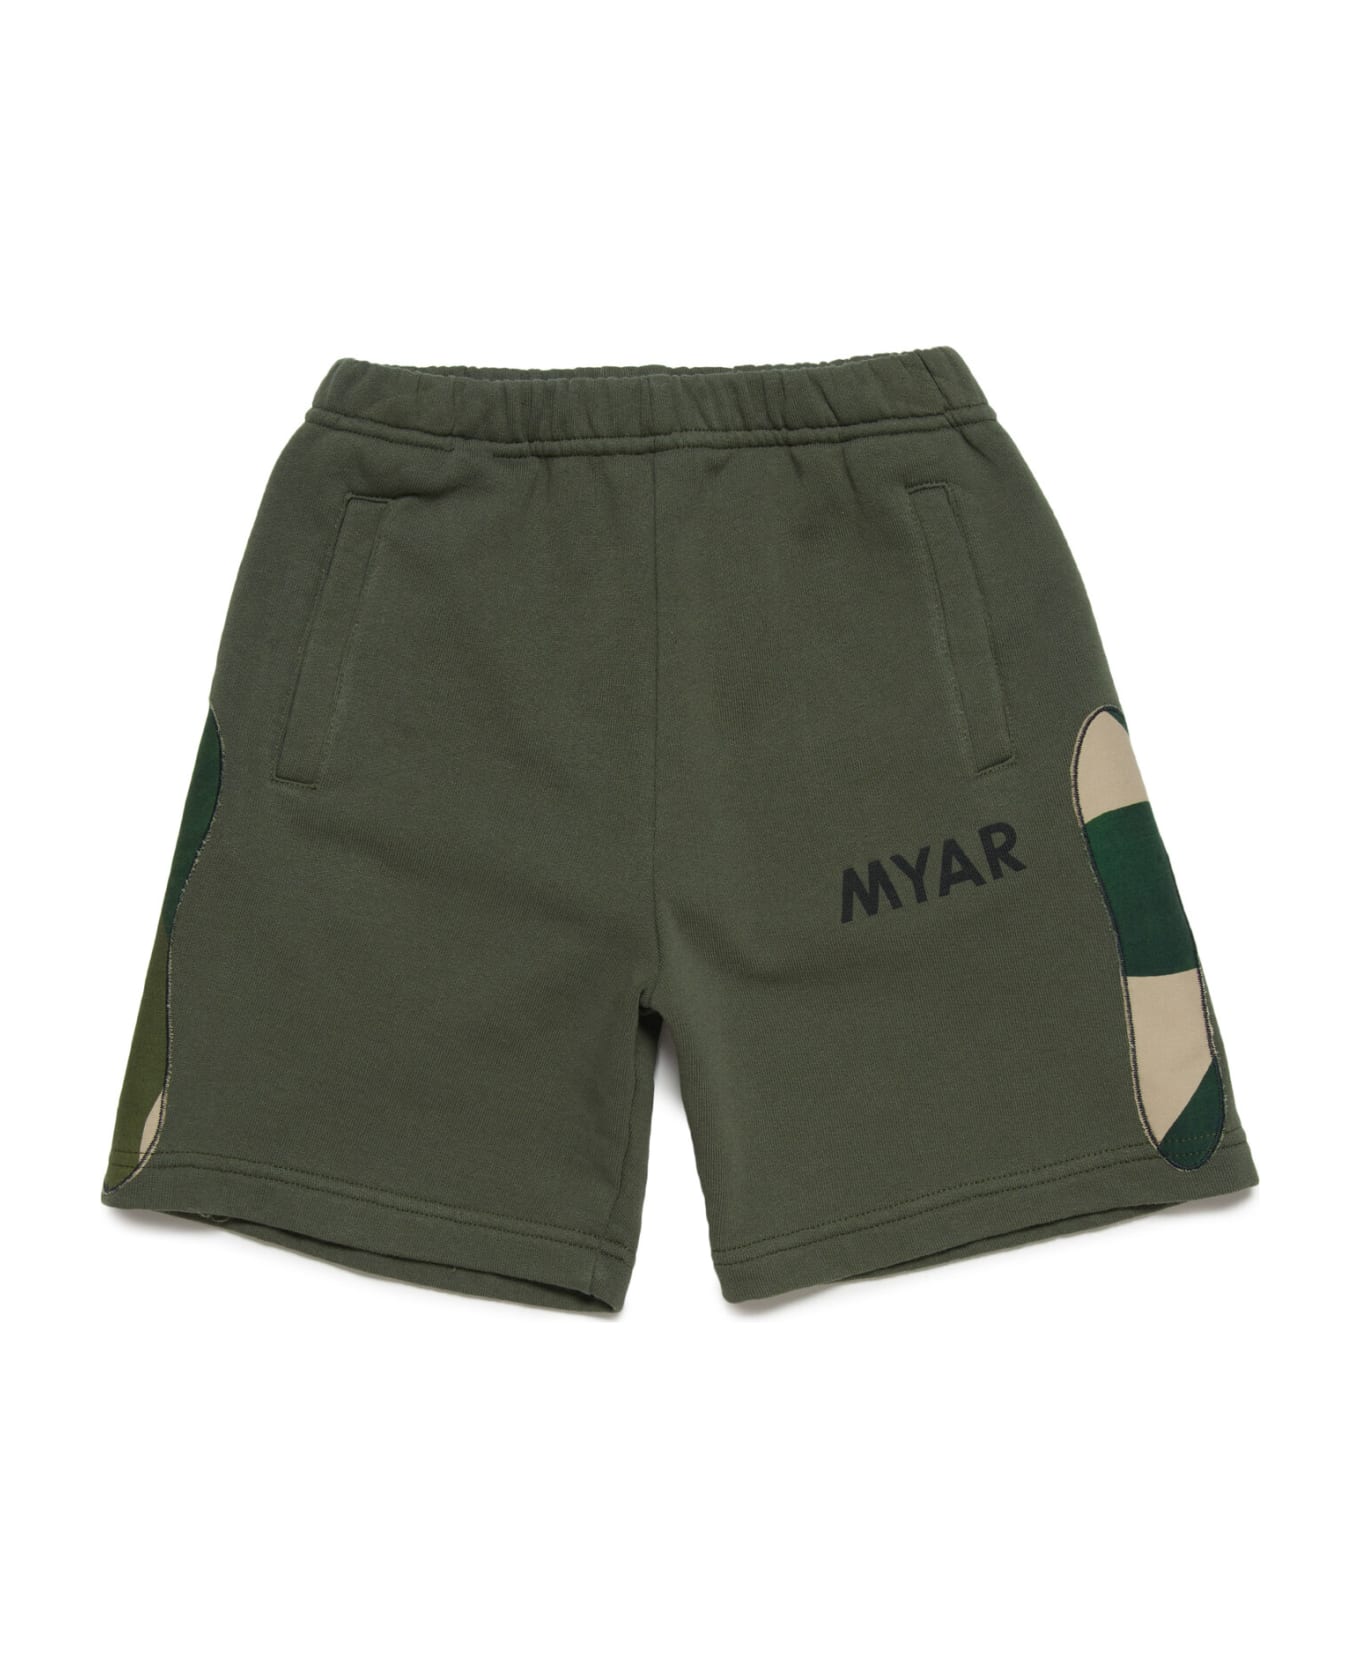 MYAR Myp13u Shorts Myar Plush Shorts With Rainforest Patterned Fabric Application - Army green